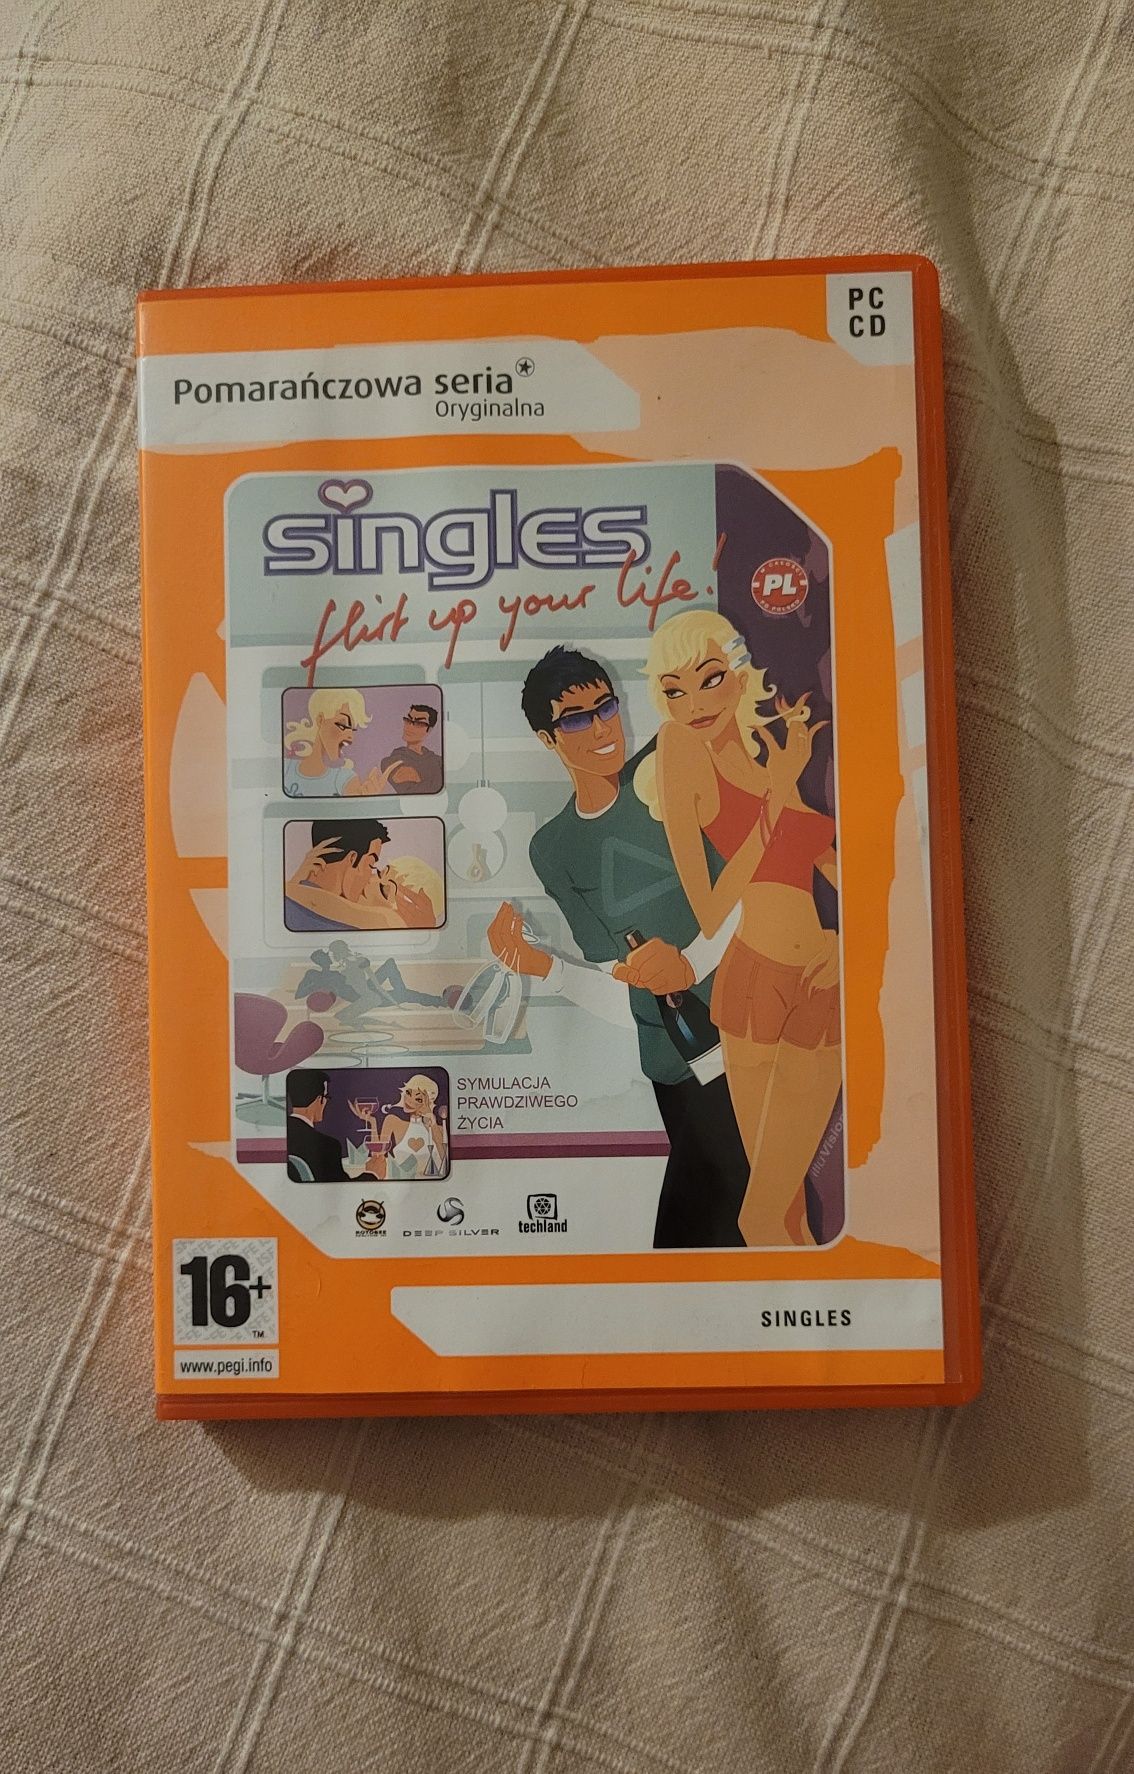 Singles Flirt up your life! PC